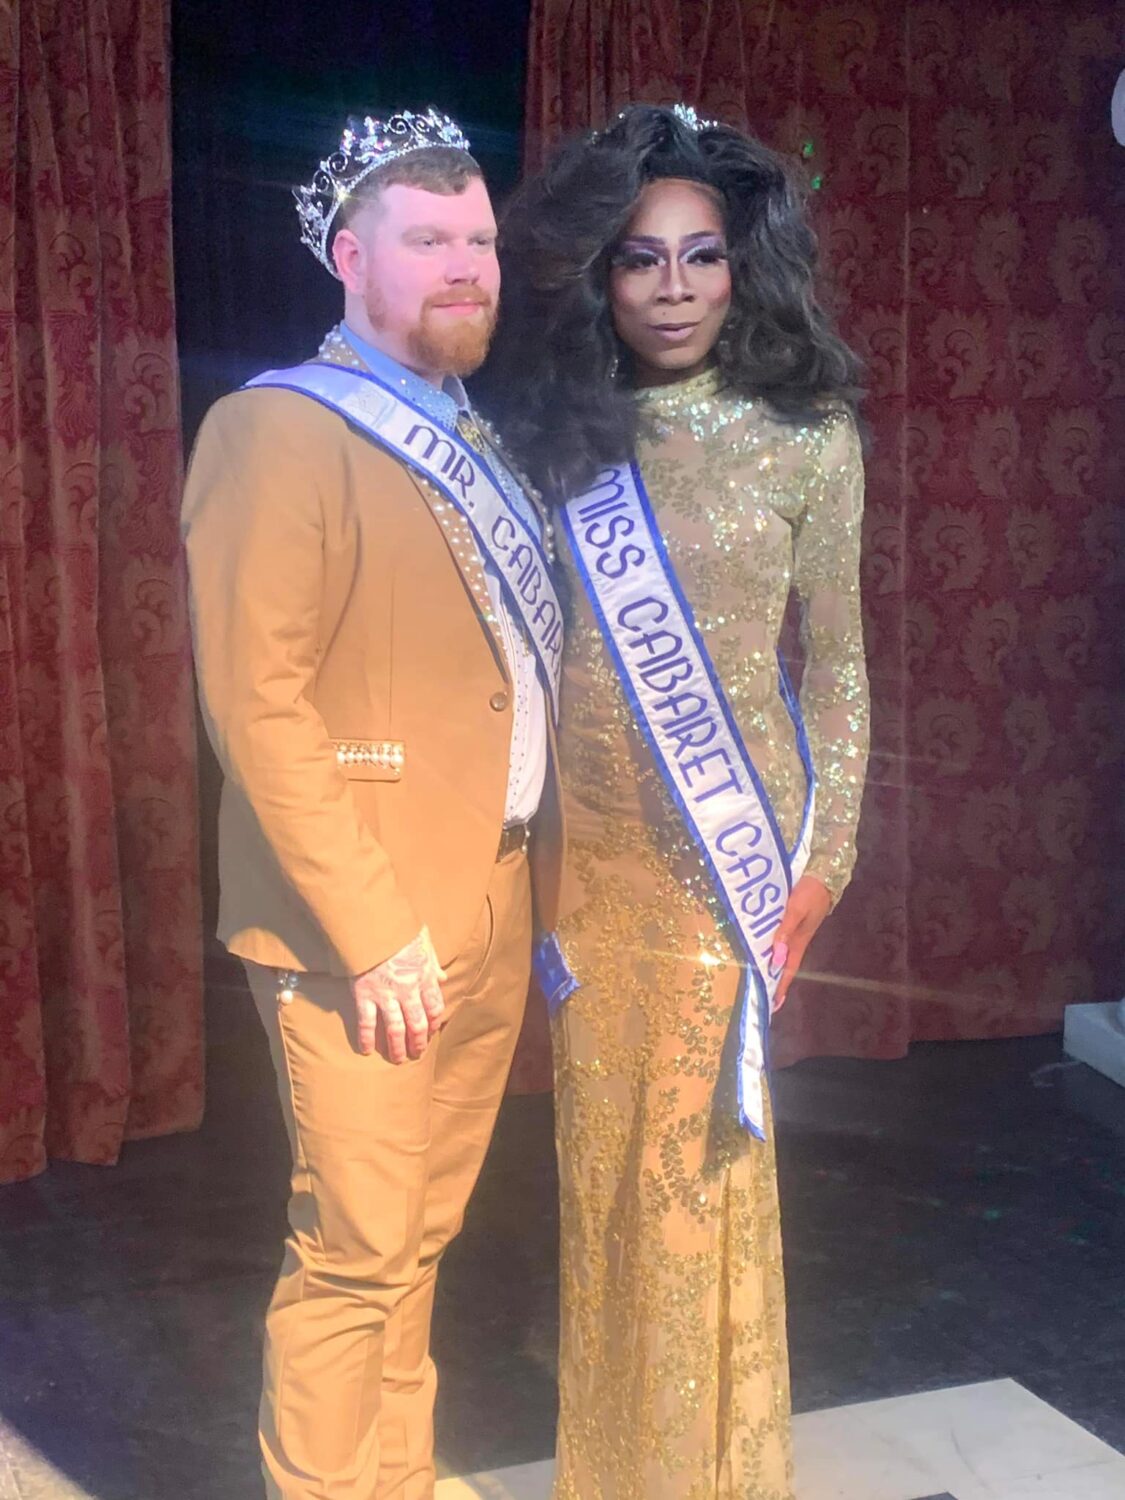 Adazia St James and Dakota Deville shortly after crowning at Mr. and Miss Cabaret Casinova | Club Cabaret (Hickory, North Carolina) | 11/14/2021